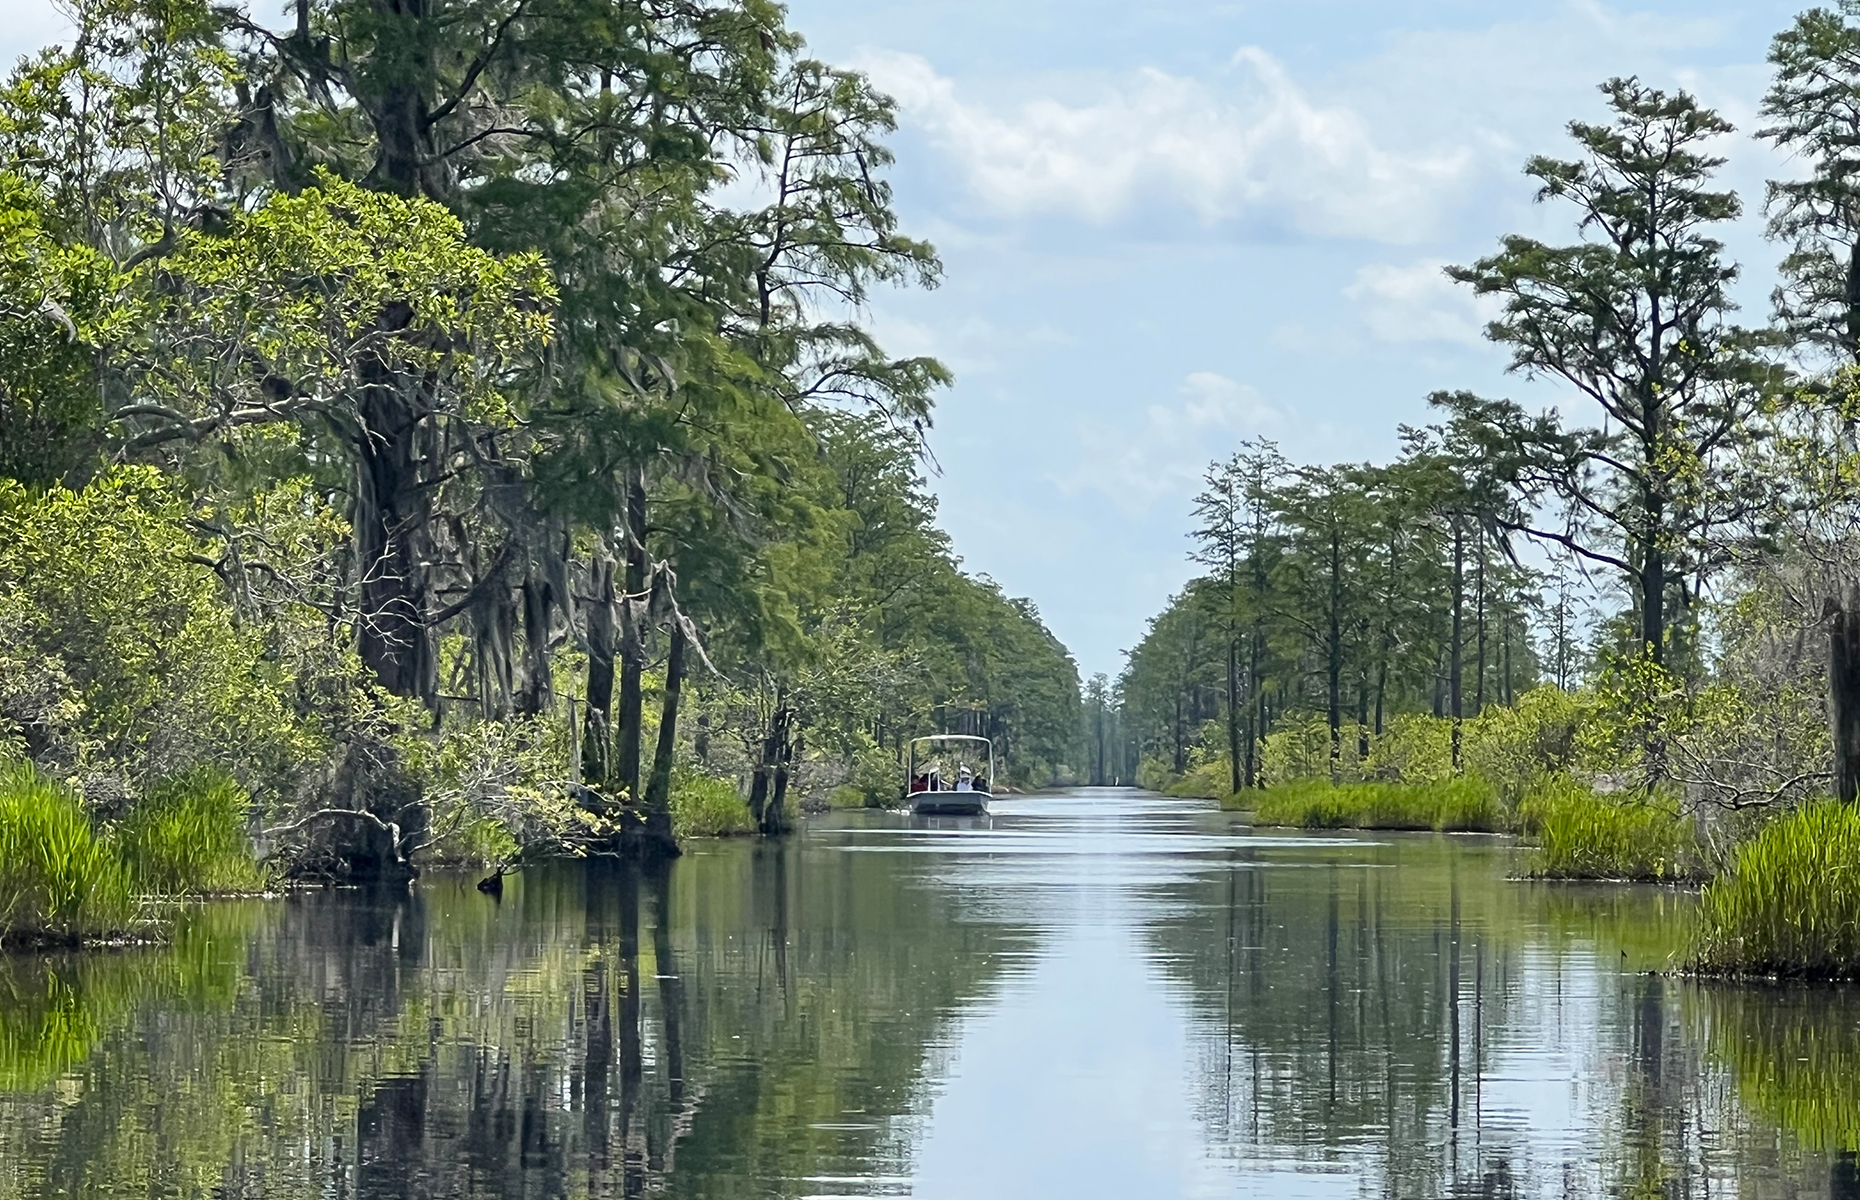 Okefenokee Swamp tour, Florida/Georgia. (Image: Lauren Jarvis)